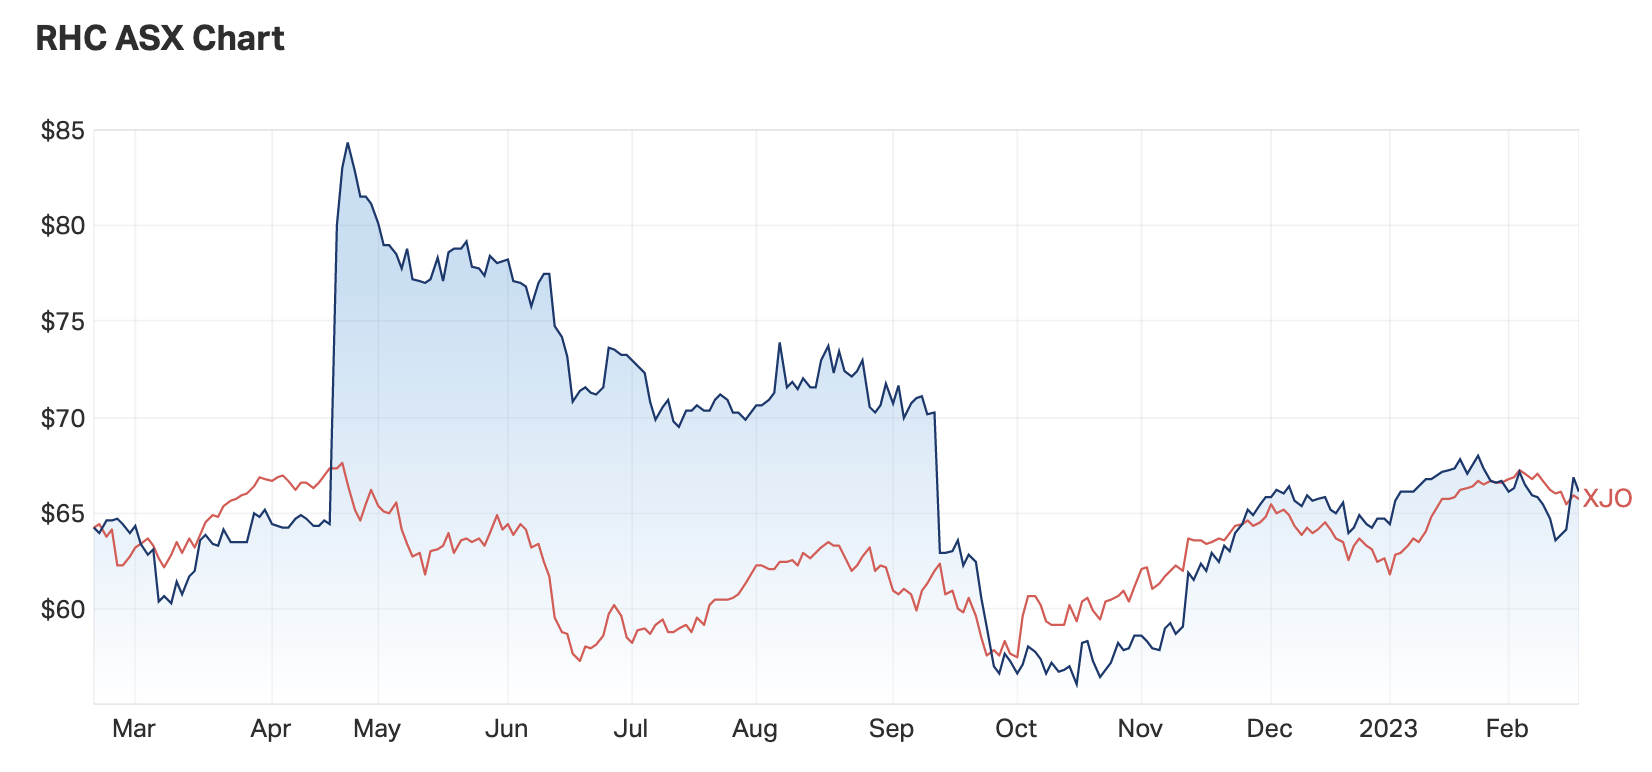 RHC vs ASX 200, 1-yr chart (Source: Market Index)